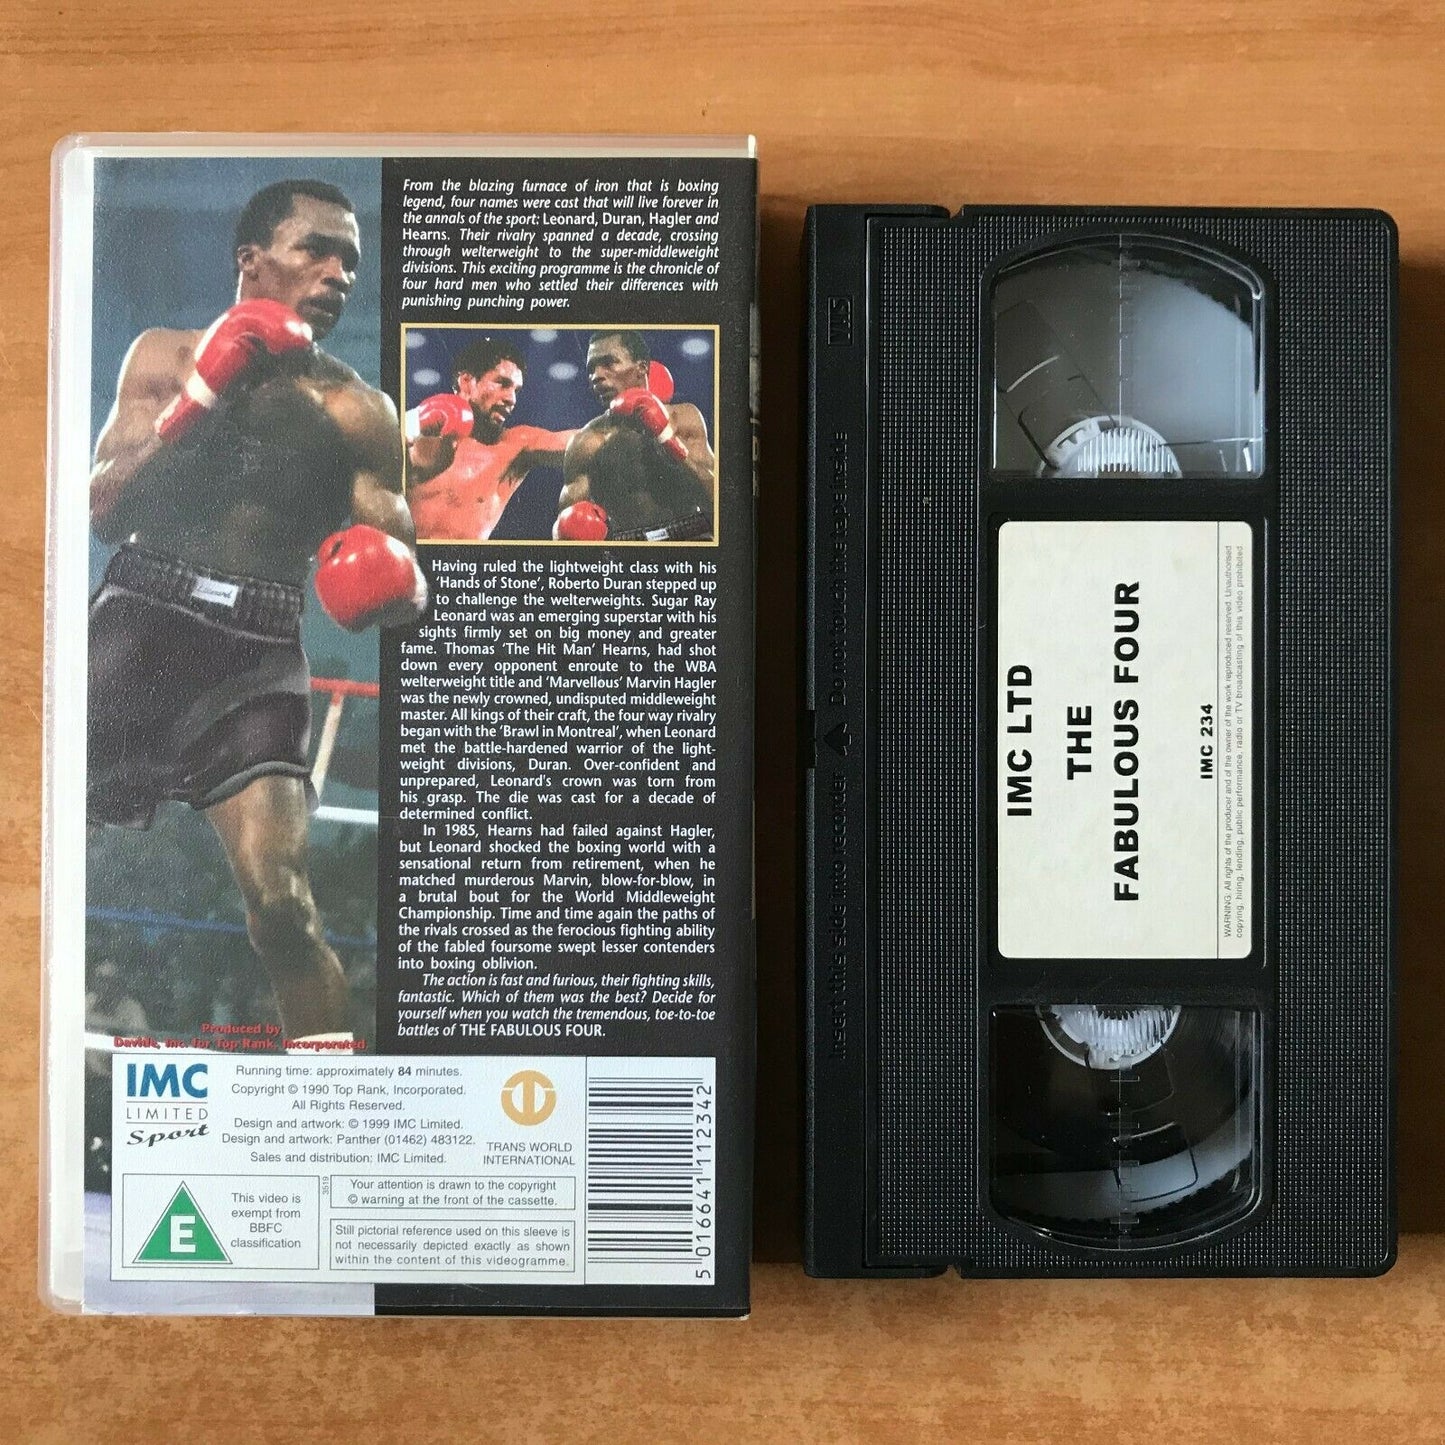 The Fabulous 4: Duran - Leonard - Hagler - Hearns - Boxing - Sports - Pal VHS-